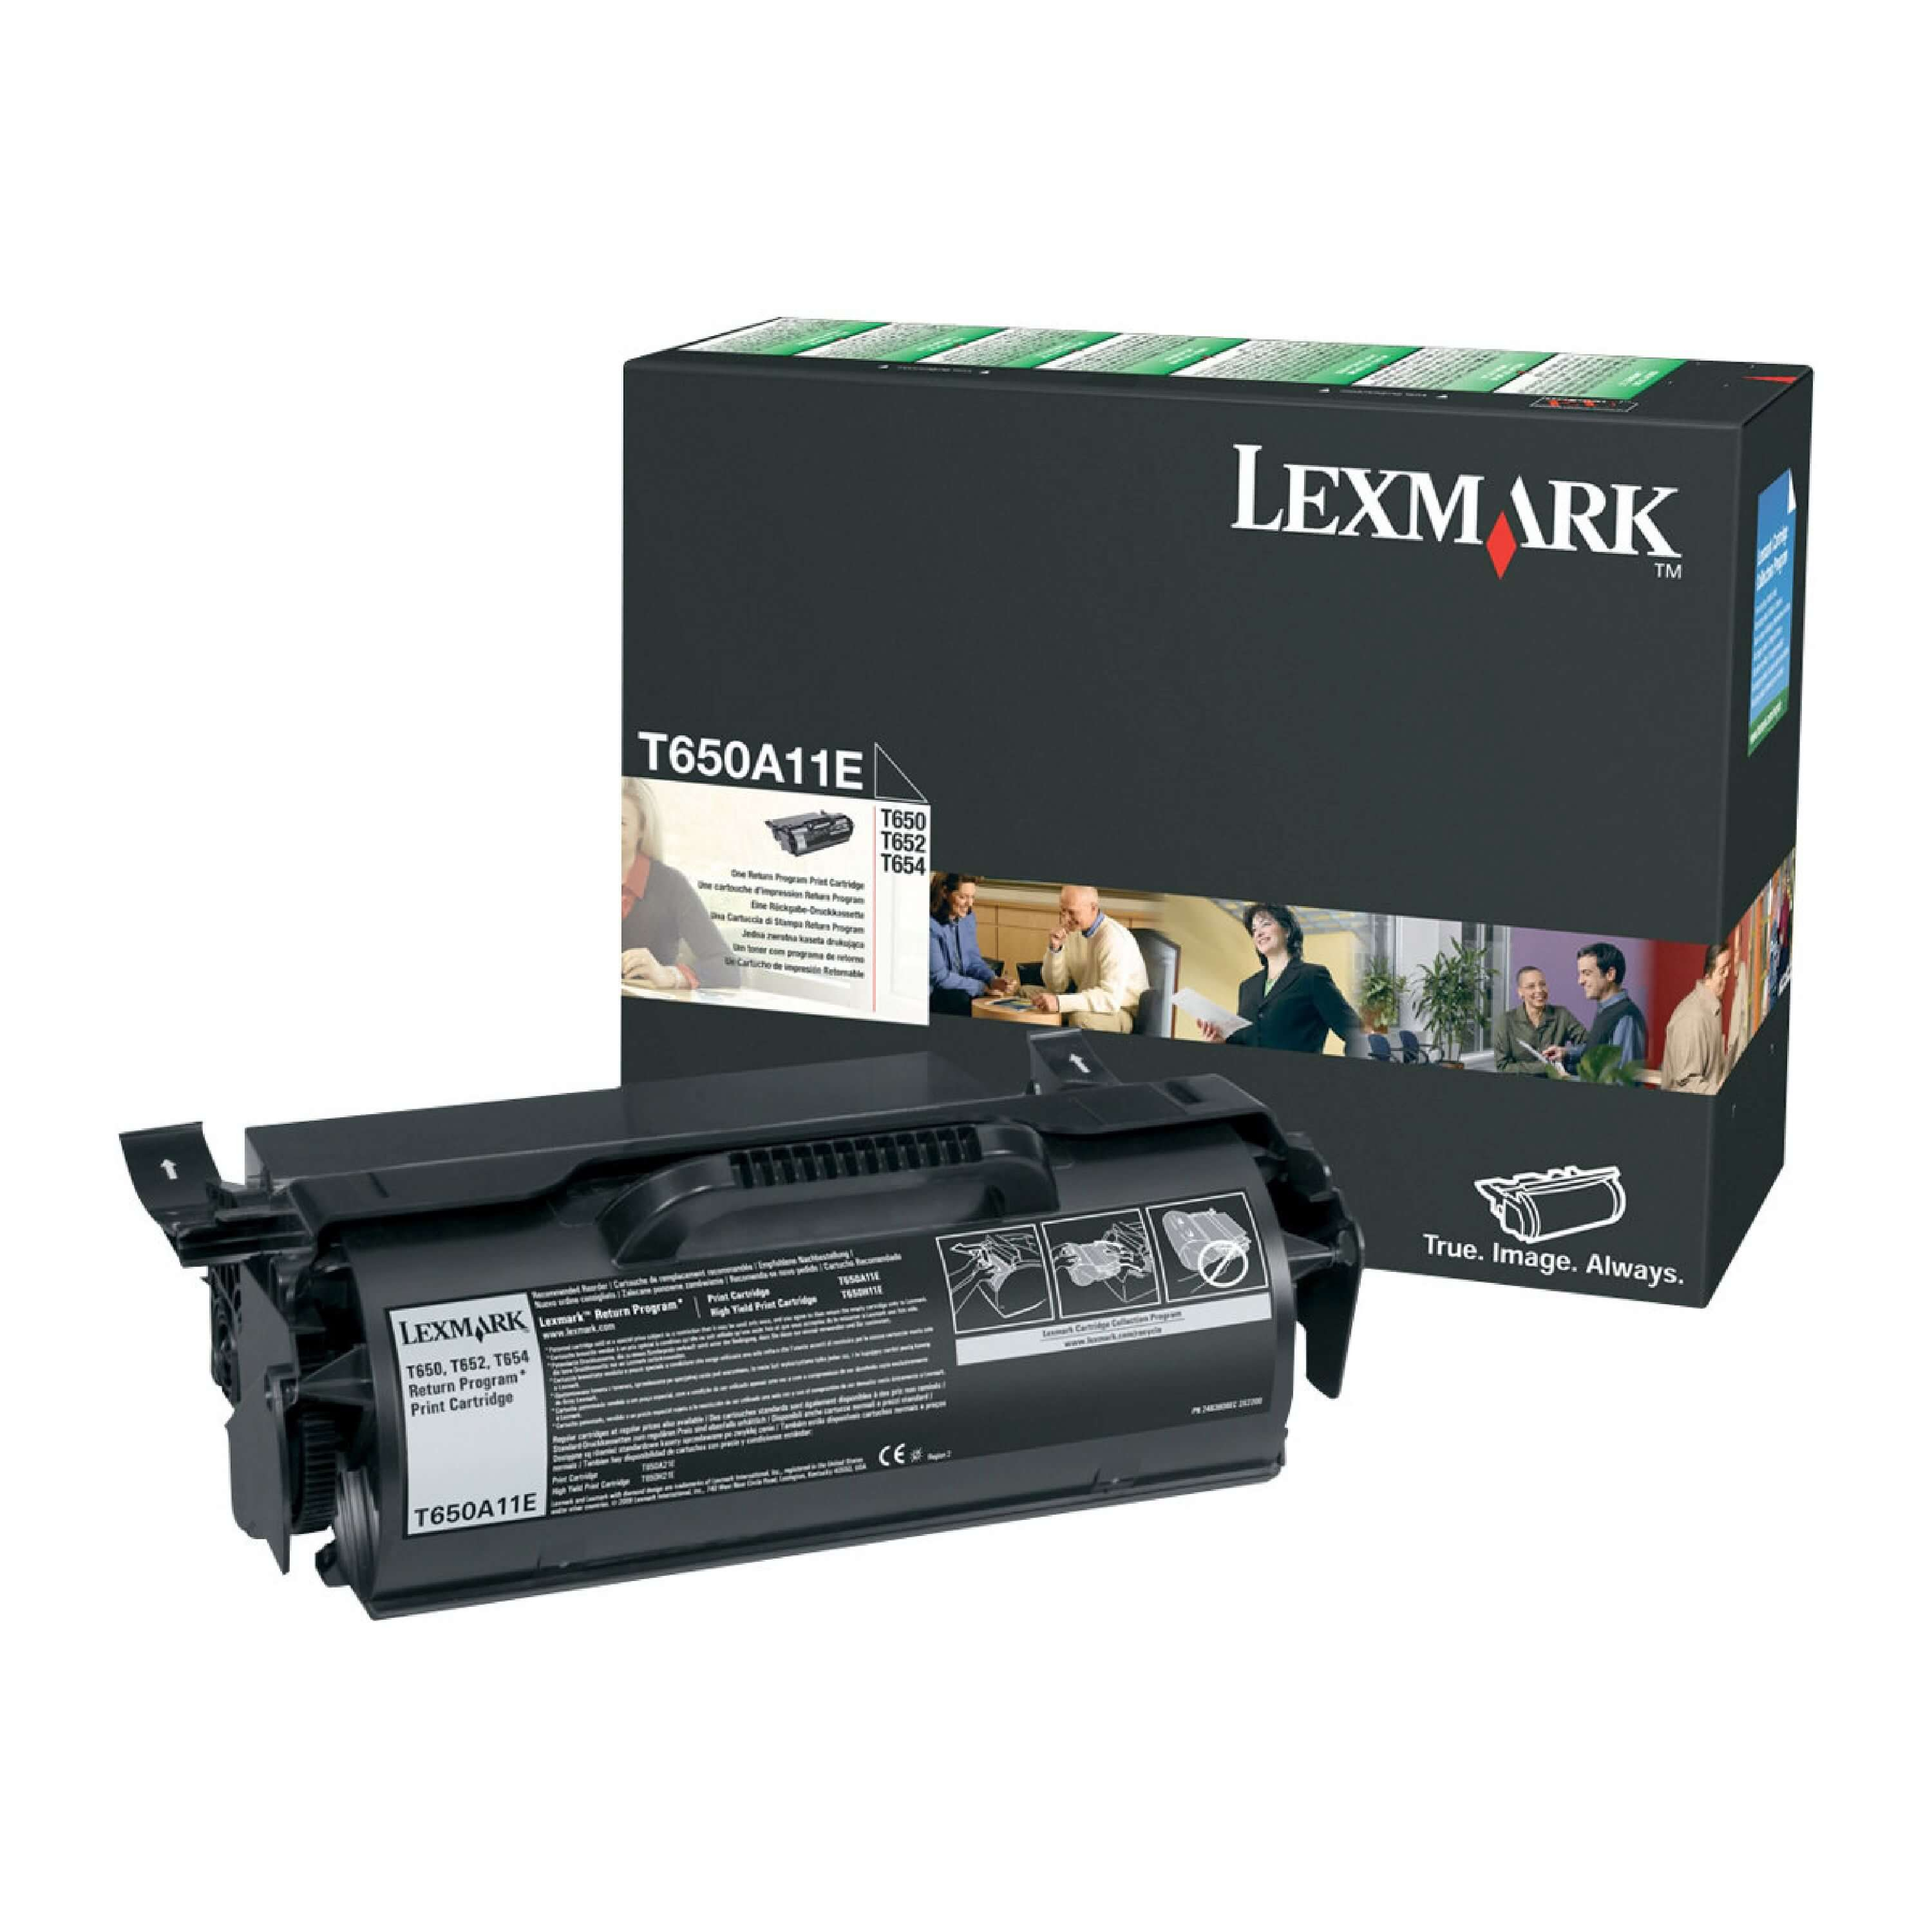 Original Toner Lexmark T 652 DTN (T650A11E)